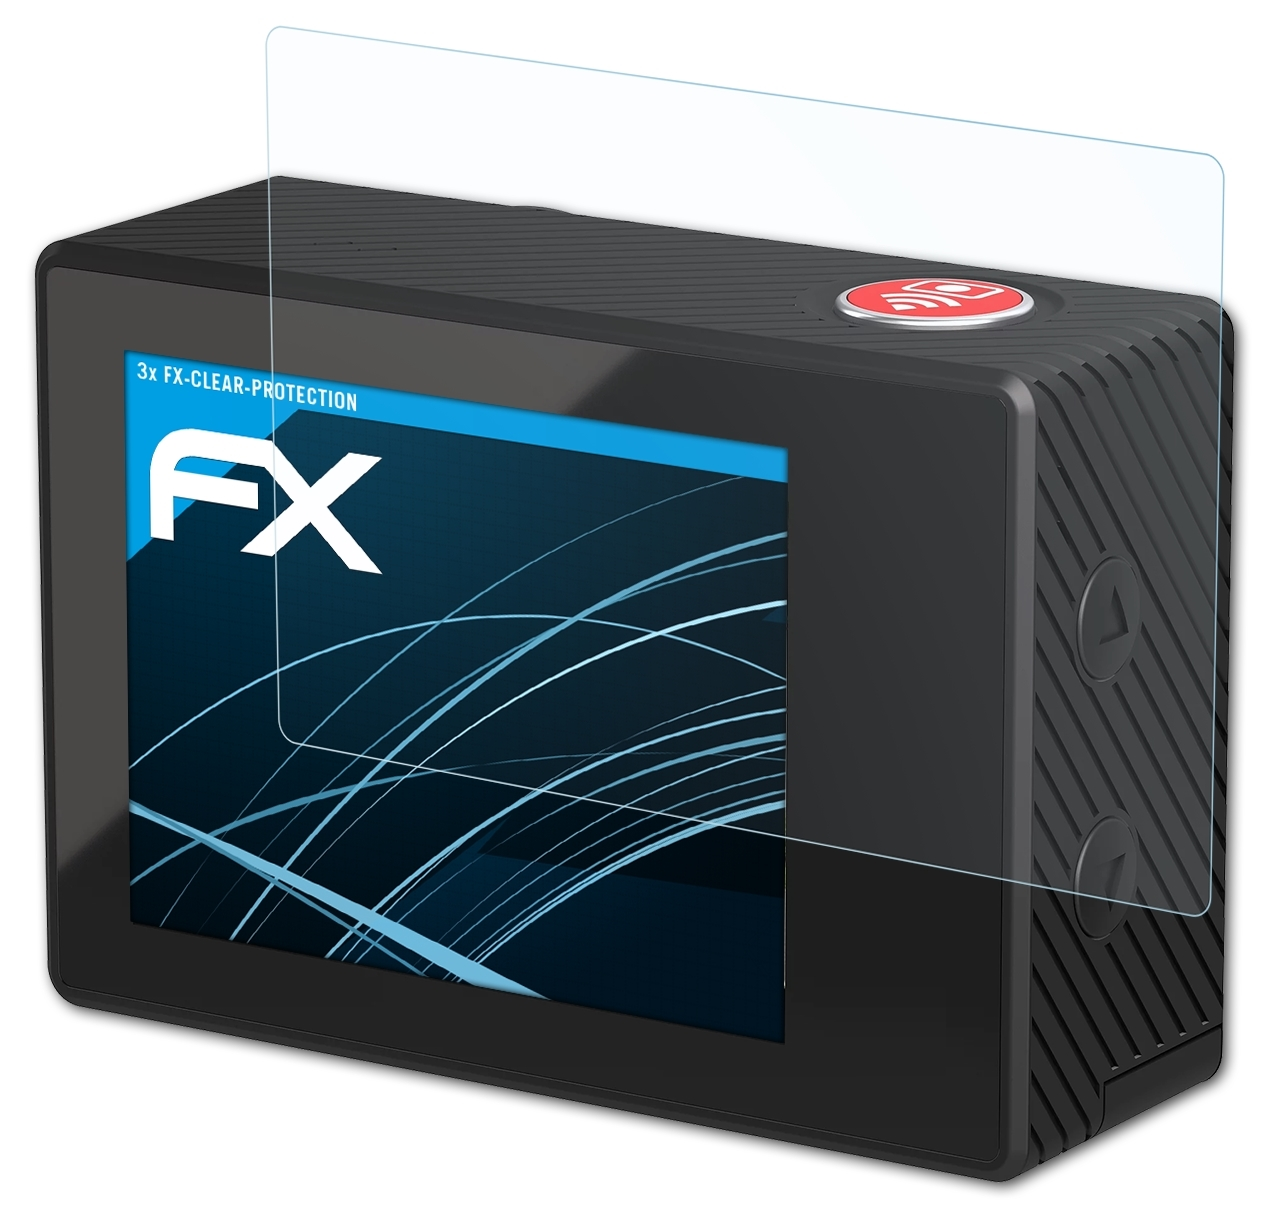 ATFOLIX 3x FX-Clear Displayschutz(für Lamax Taurus) X10